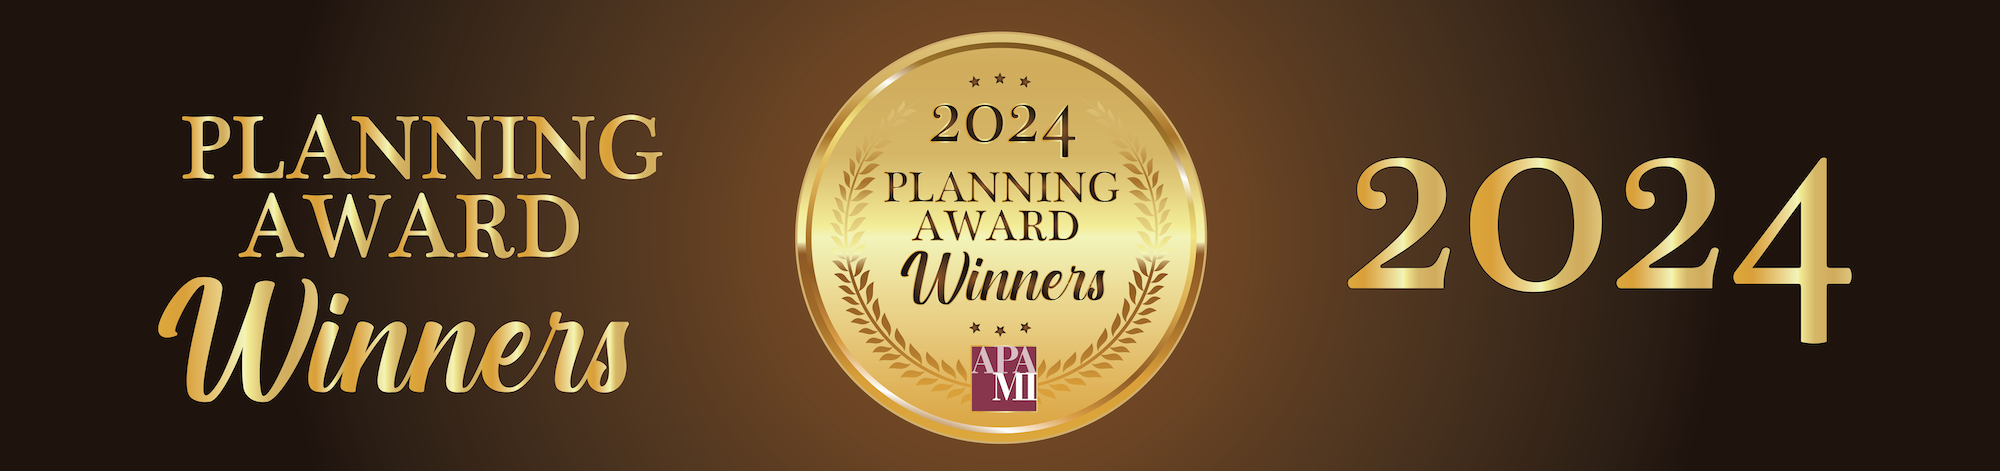 Planning Award Banner 2024